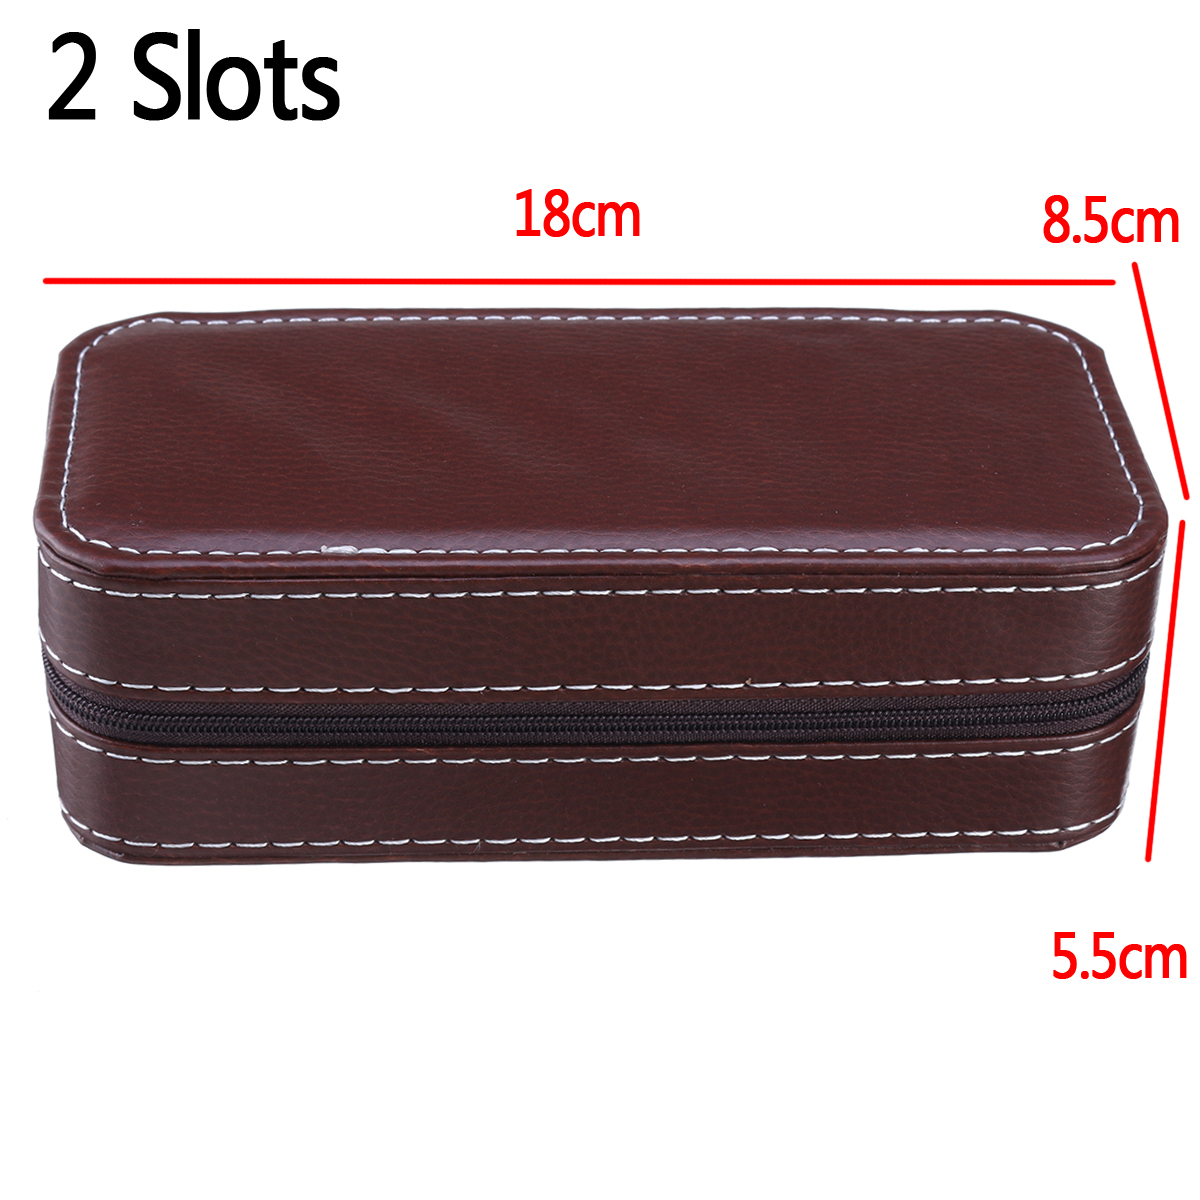 248-Slots-Portable-PU-Leather-Zipper-Watch-Box-Watch-Storage-Case-Bag-1650319-2